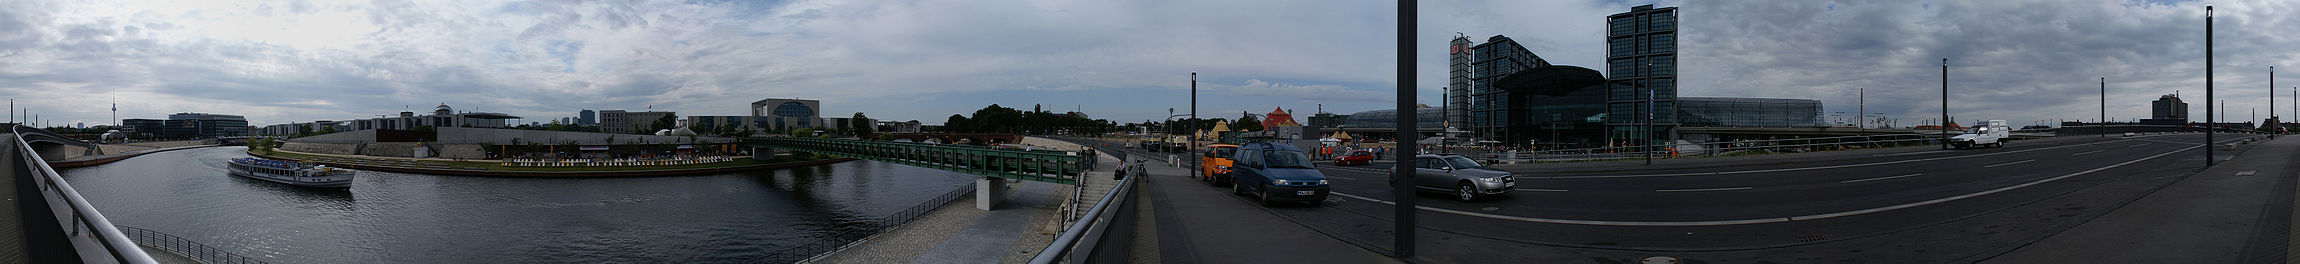 360°-Panorama (Umgebung des Berliner Hauptbahnhofs, August 2006)